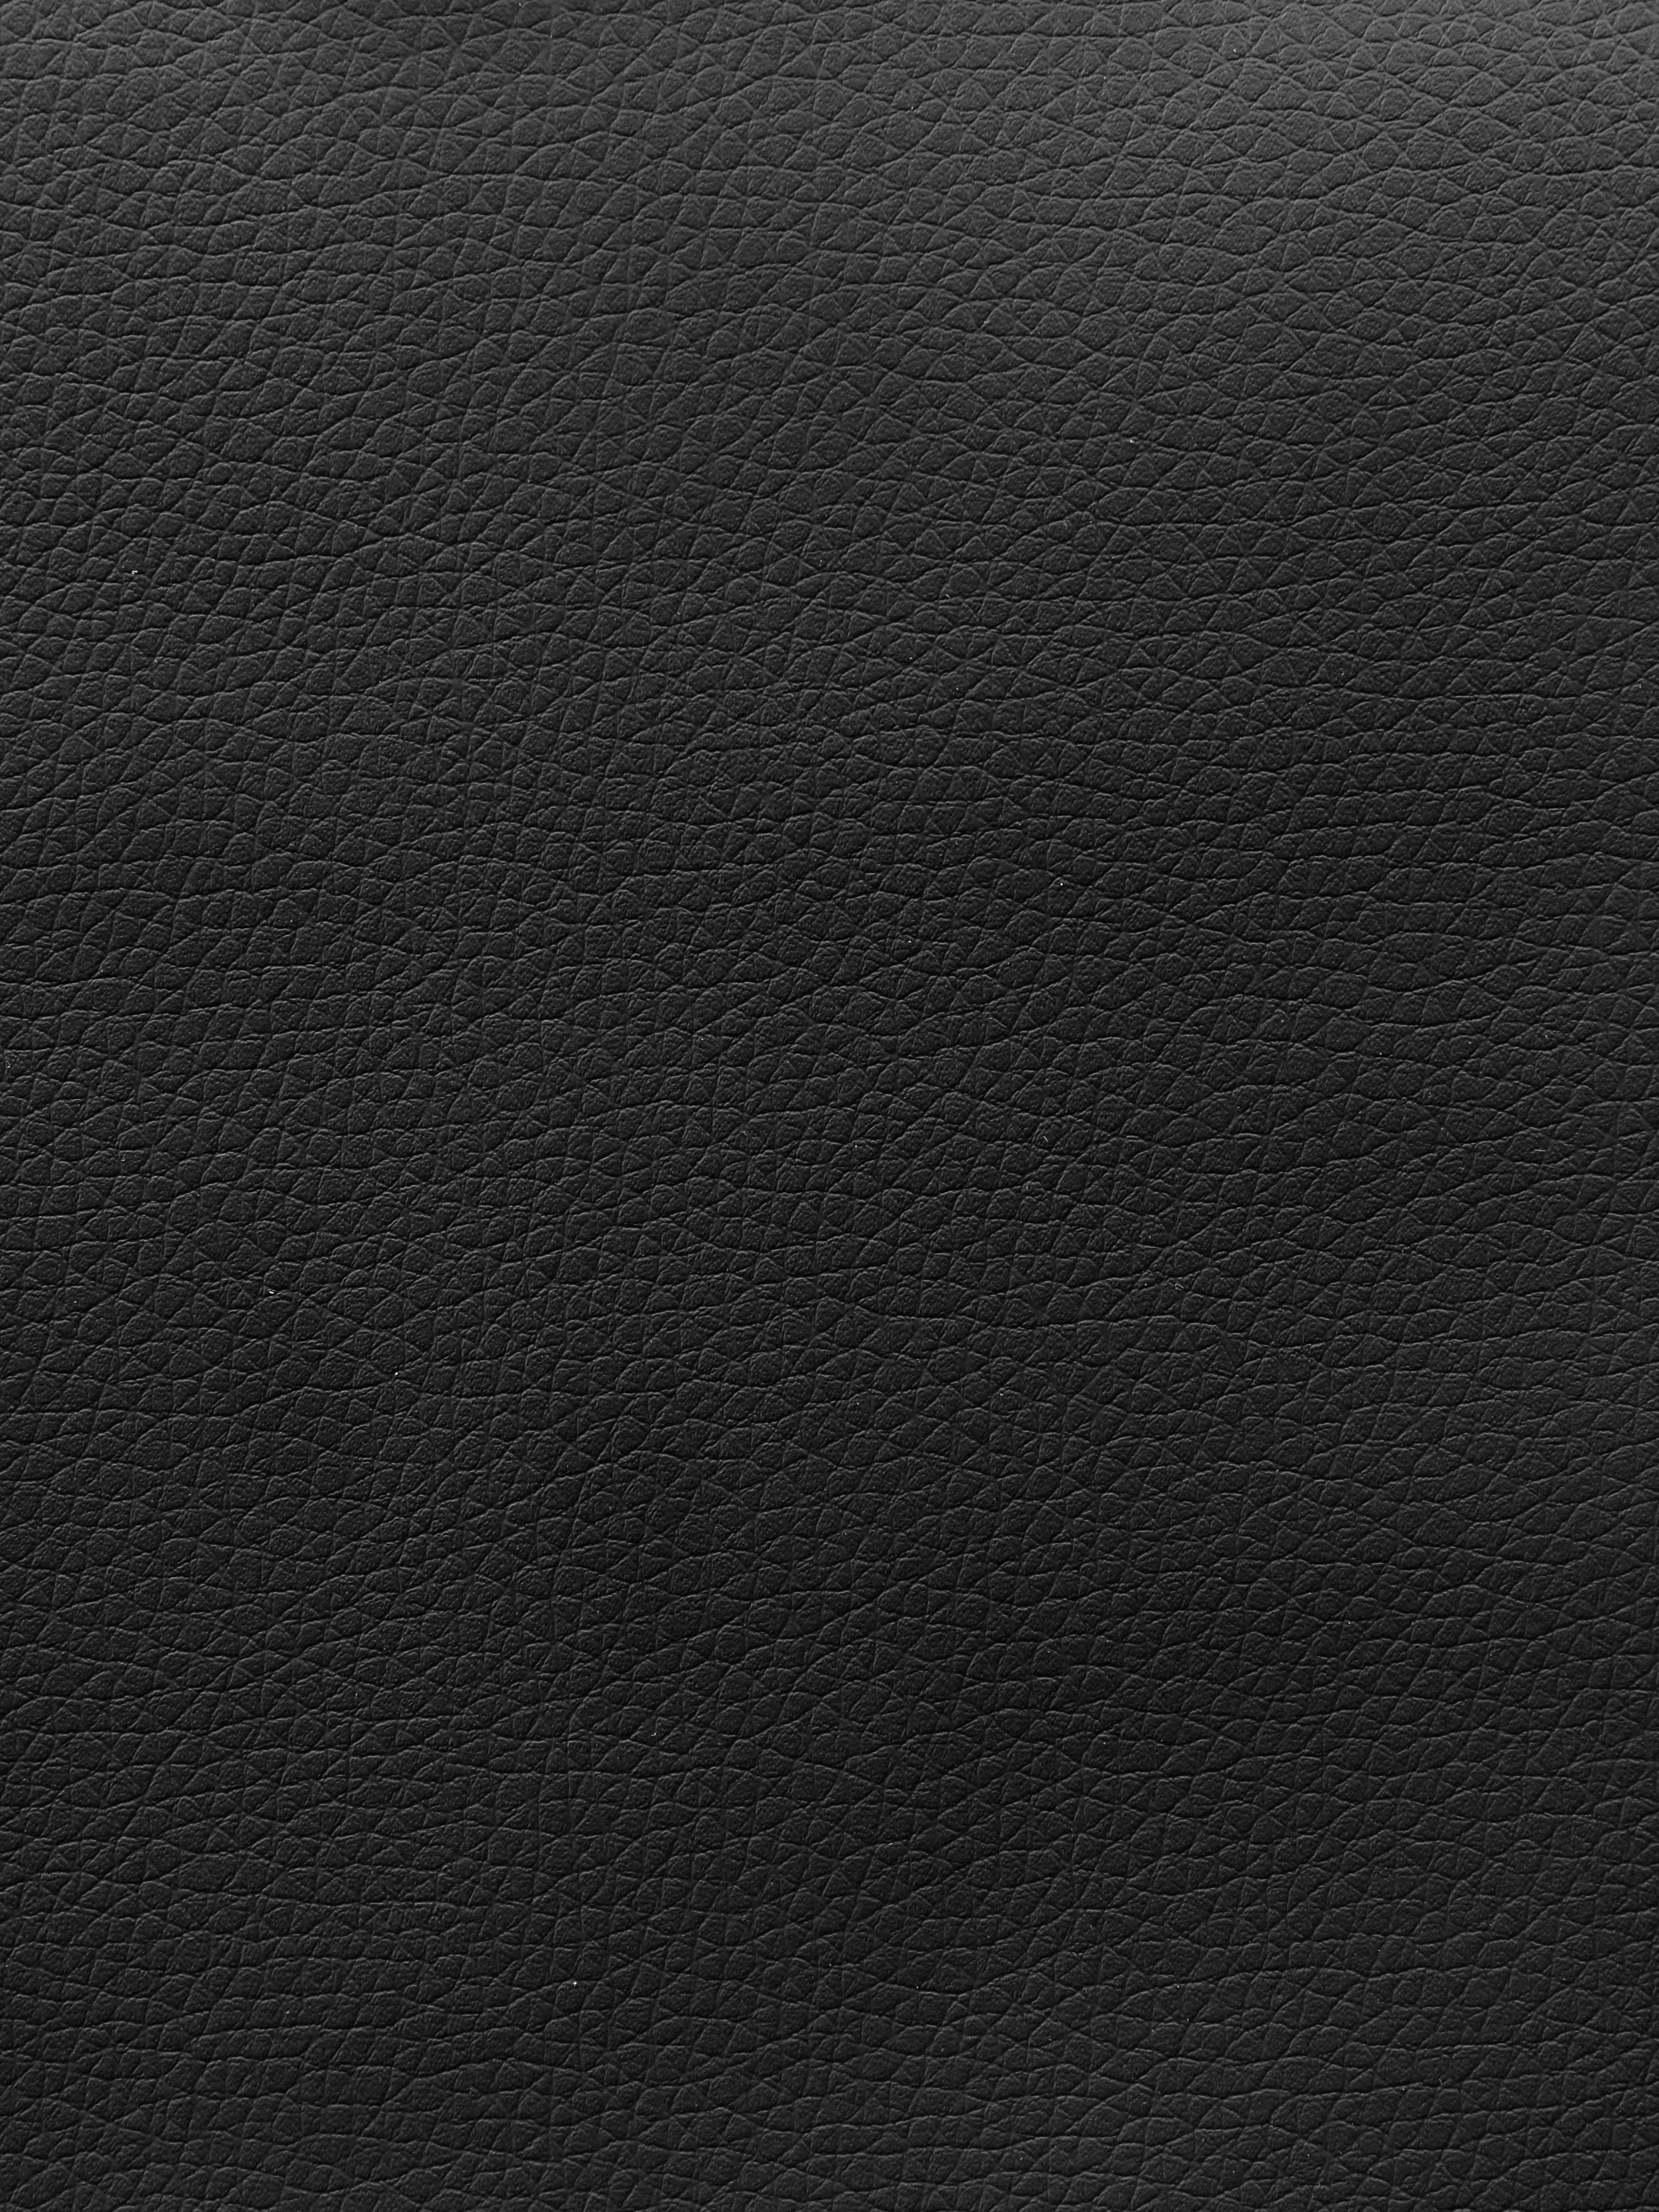 black-leather-texture-dark-embossed-fabric-free-stock-photo ...